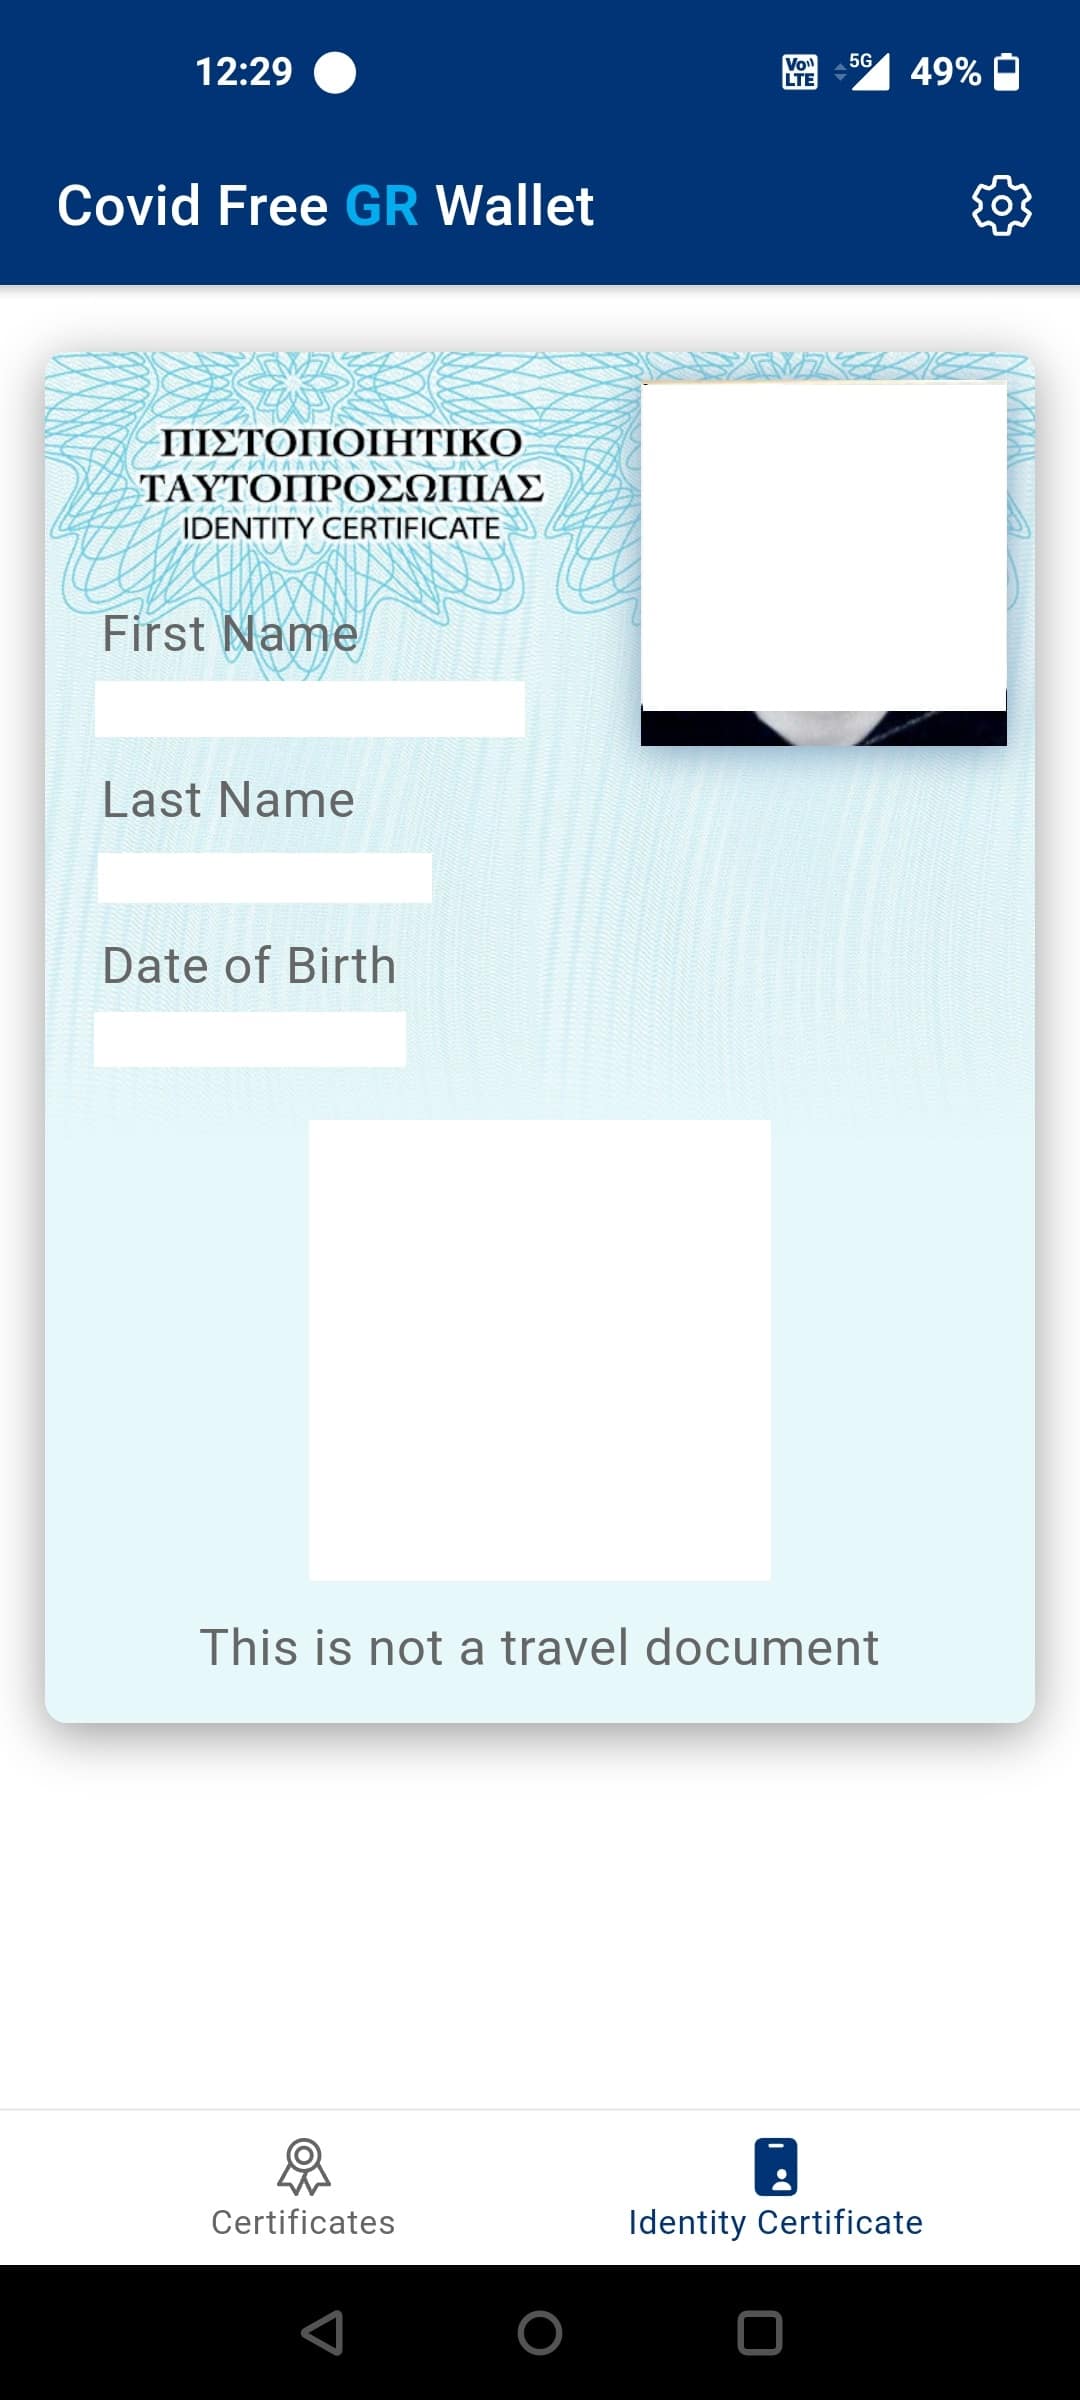 Covid Free Wallet: Ταυτότητα και πιστοποιητικό στο κινητό - Λεπτομέρειες από το υπουργείο Προστασίας του Πολίτη (εικόνες)